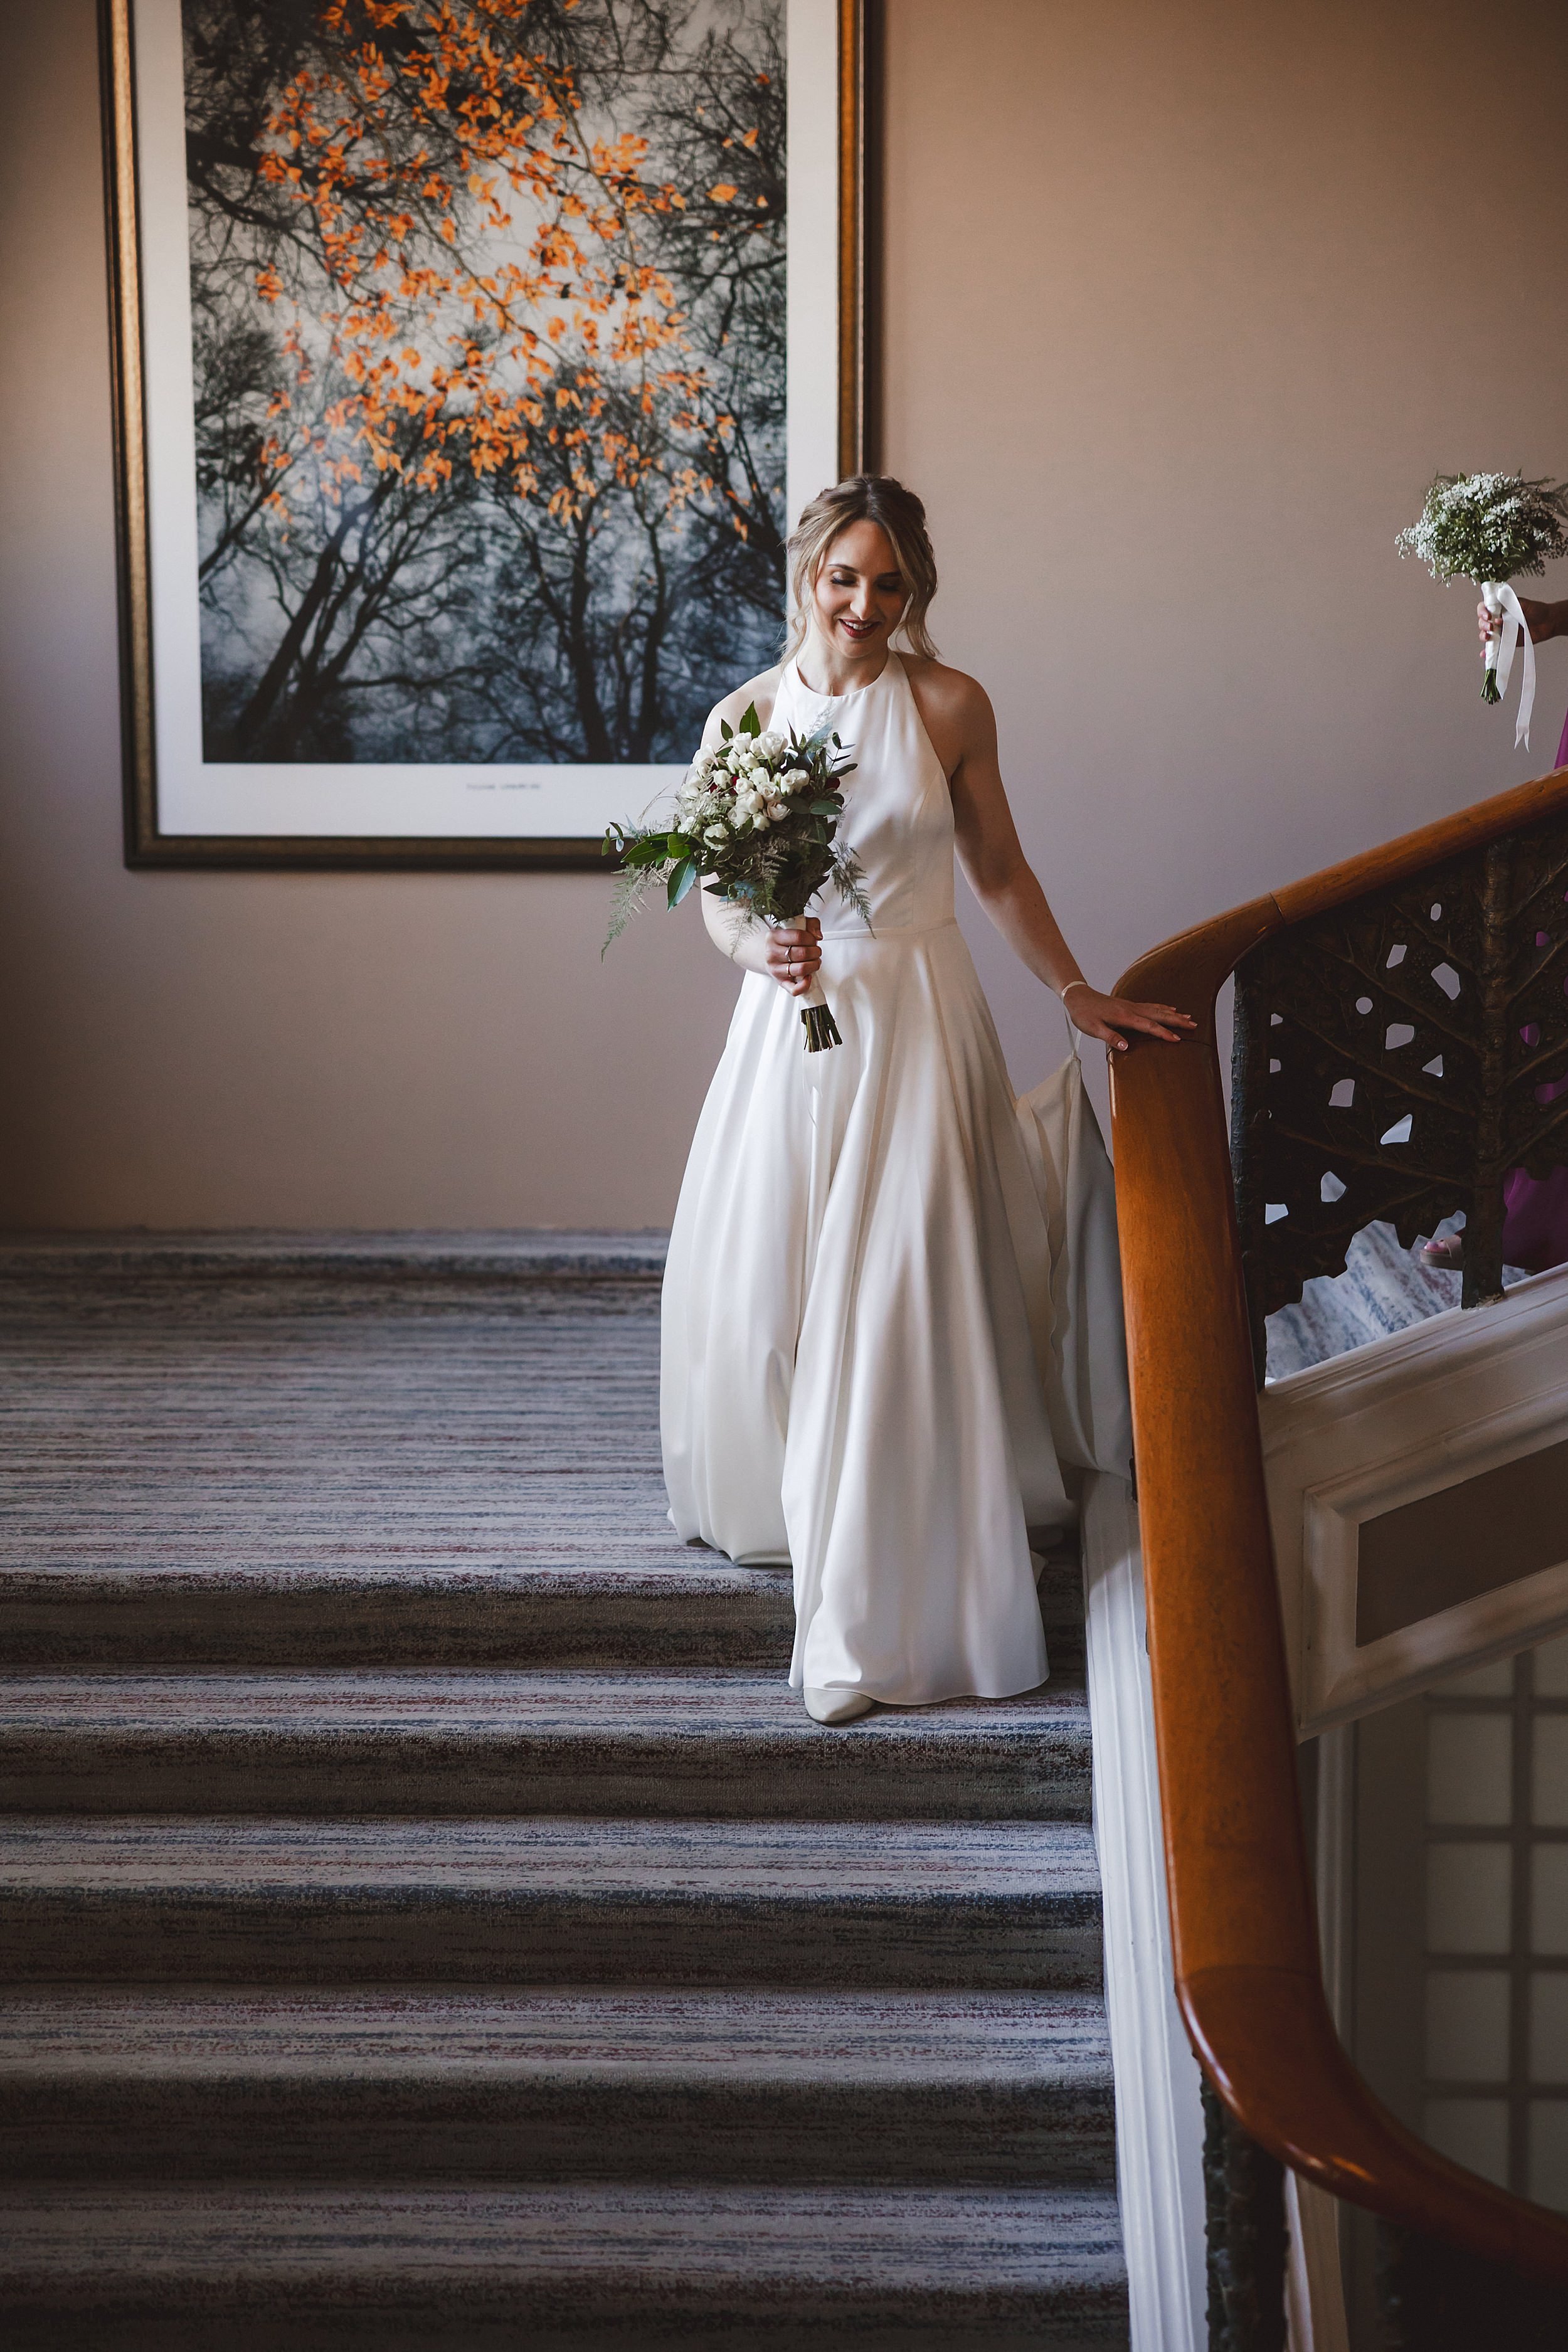 the bride descending a staircase at the caledonian waldorf astoria hotel shot by documentary wedding photographer edinburgh scotland